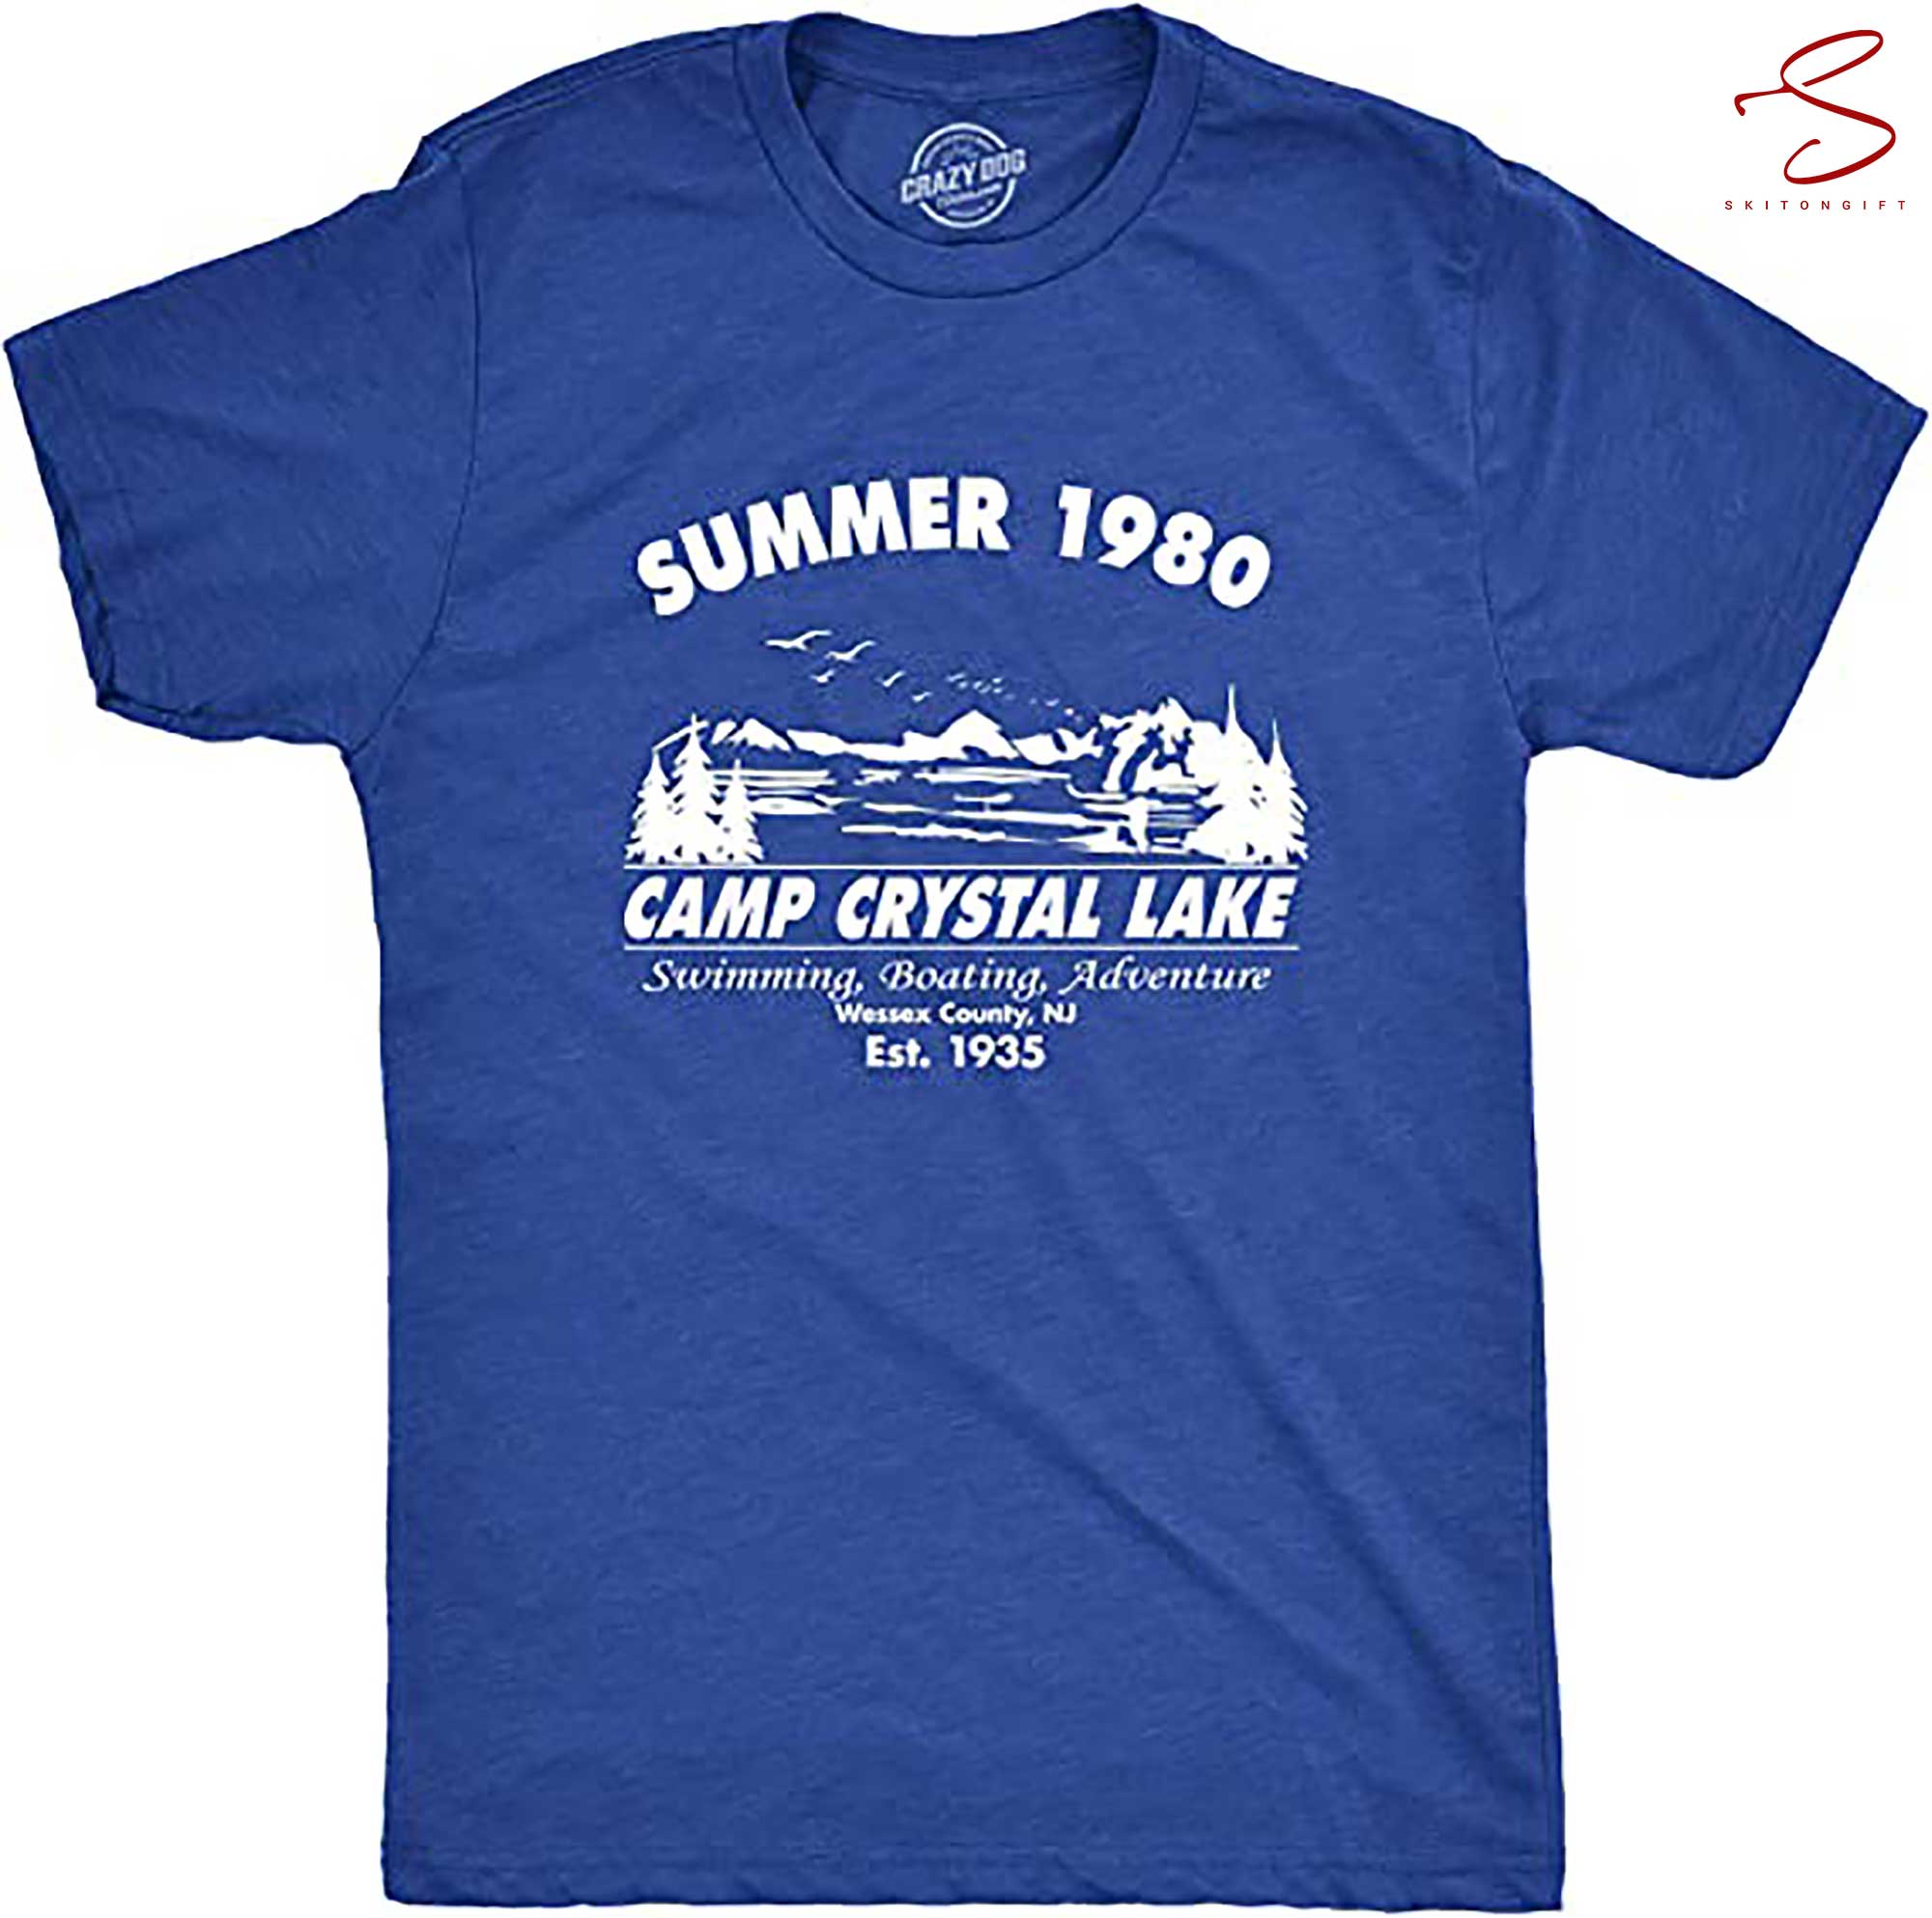 Skitongift Summer 1980 Men Funny T Shirt Graphic Camping Vintage Cool 80s Novelty Tees